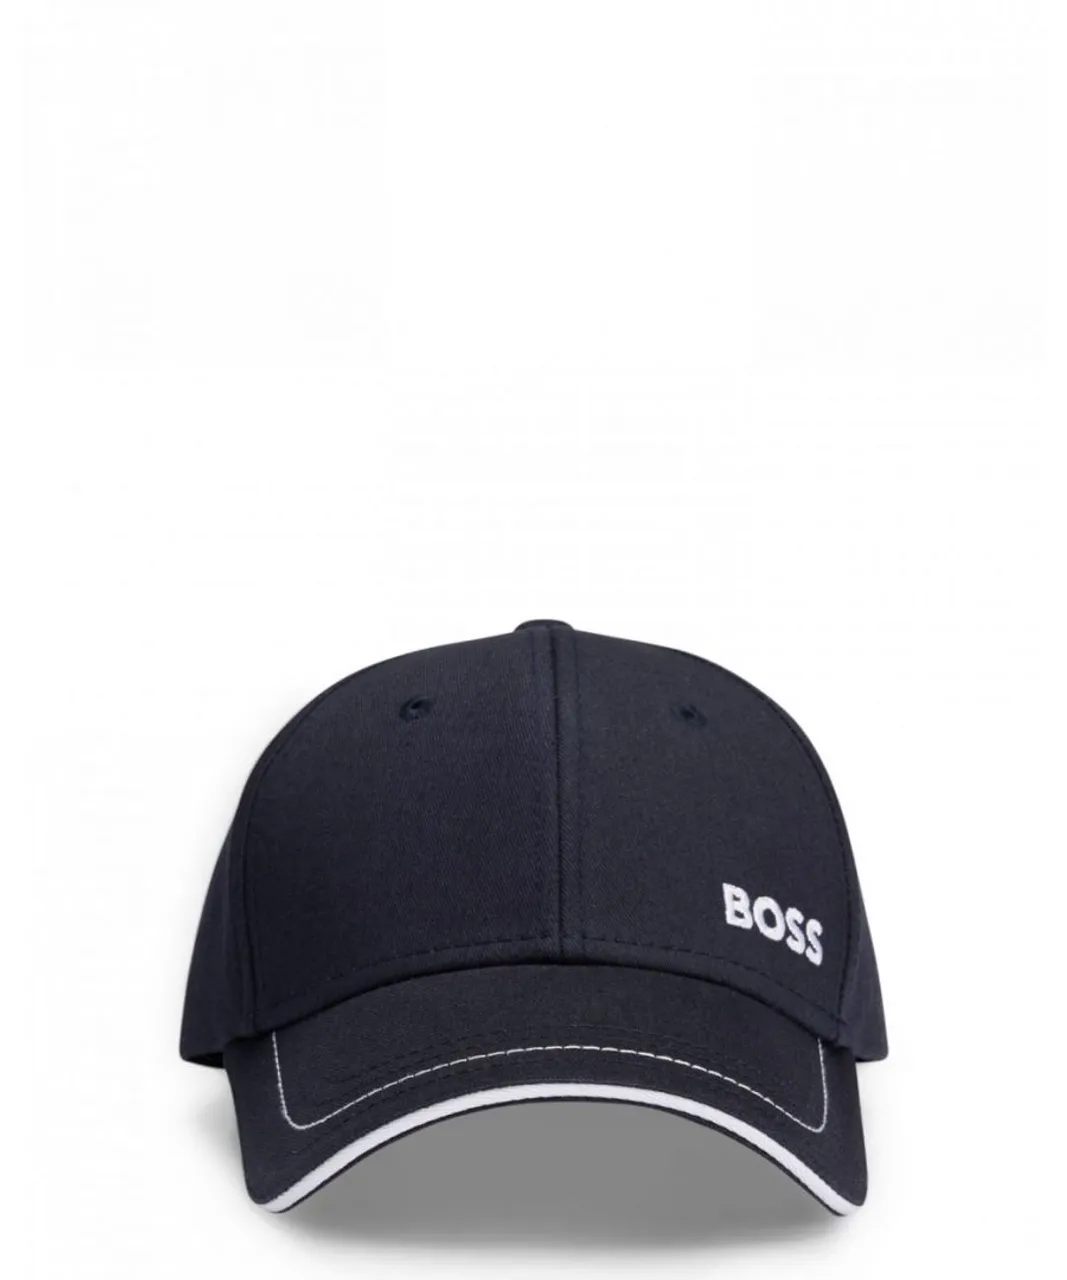 BOSS Green Cap-1 Mens Cotton-Twill Cap With Logo Detail - Dark Blue - One